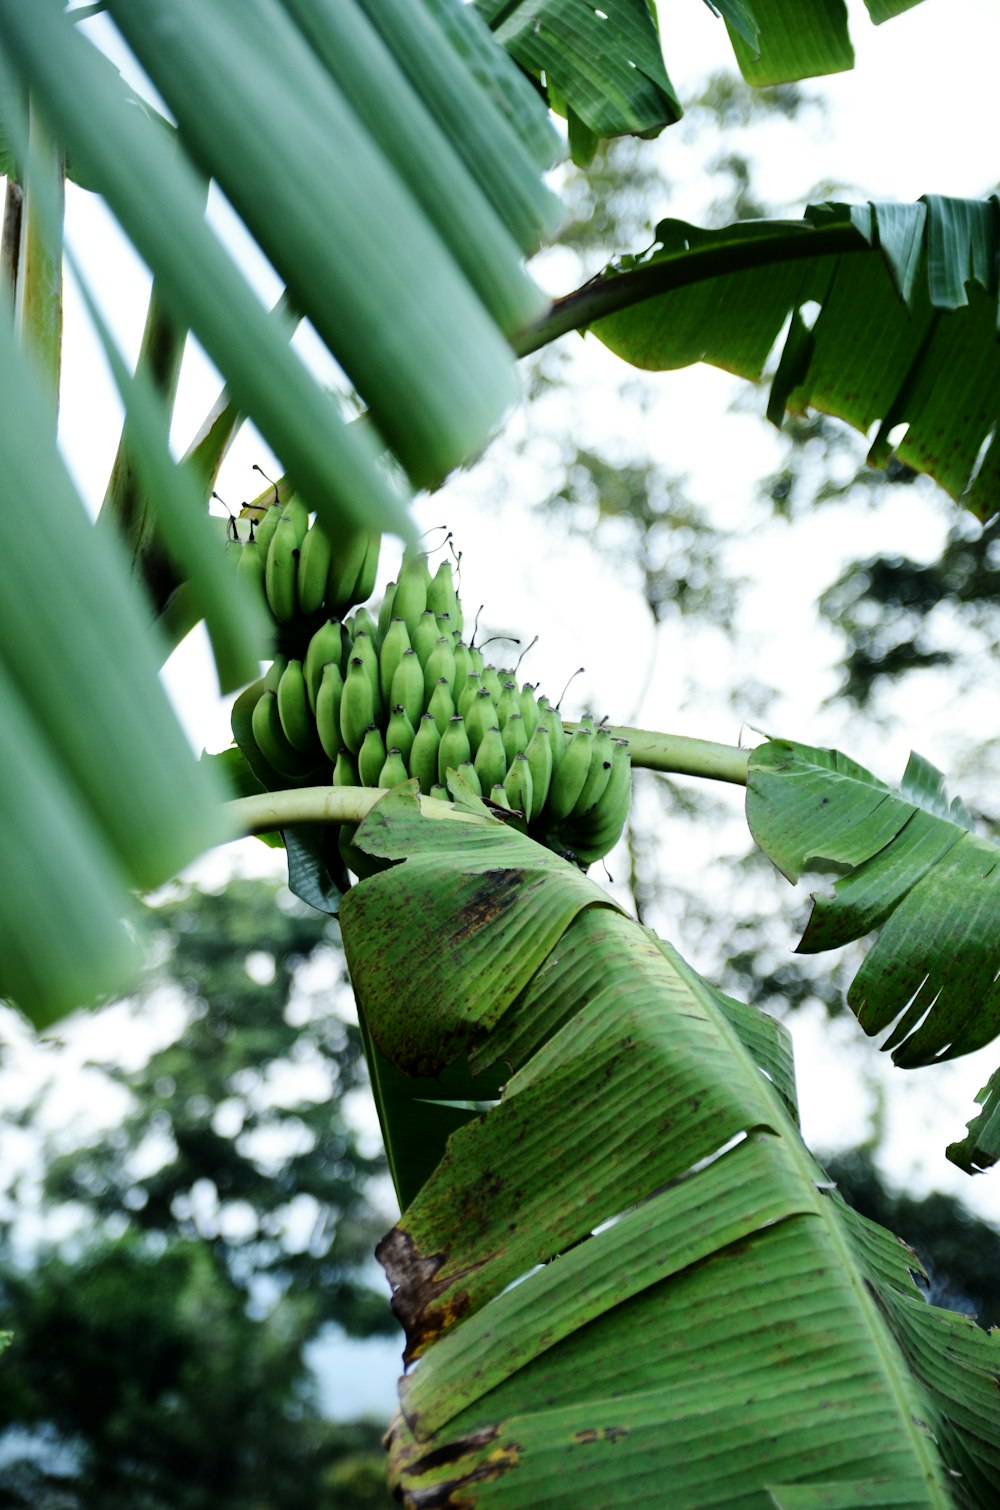 green banana fruits on tree during daytime